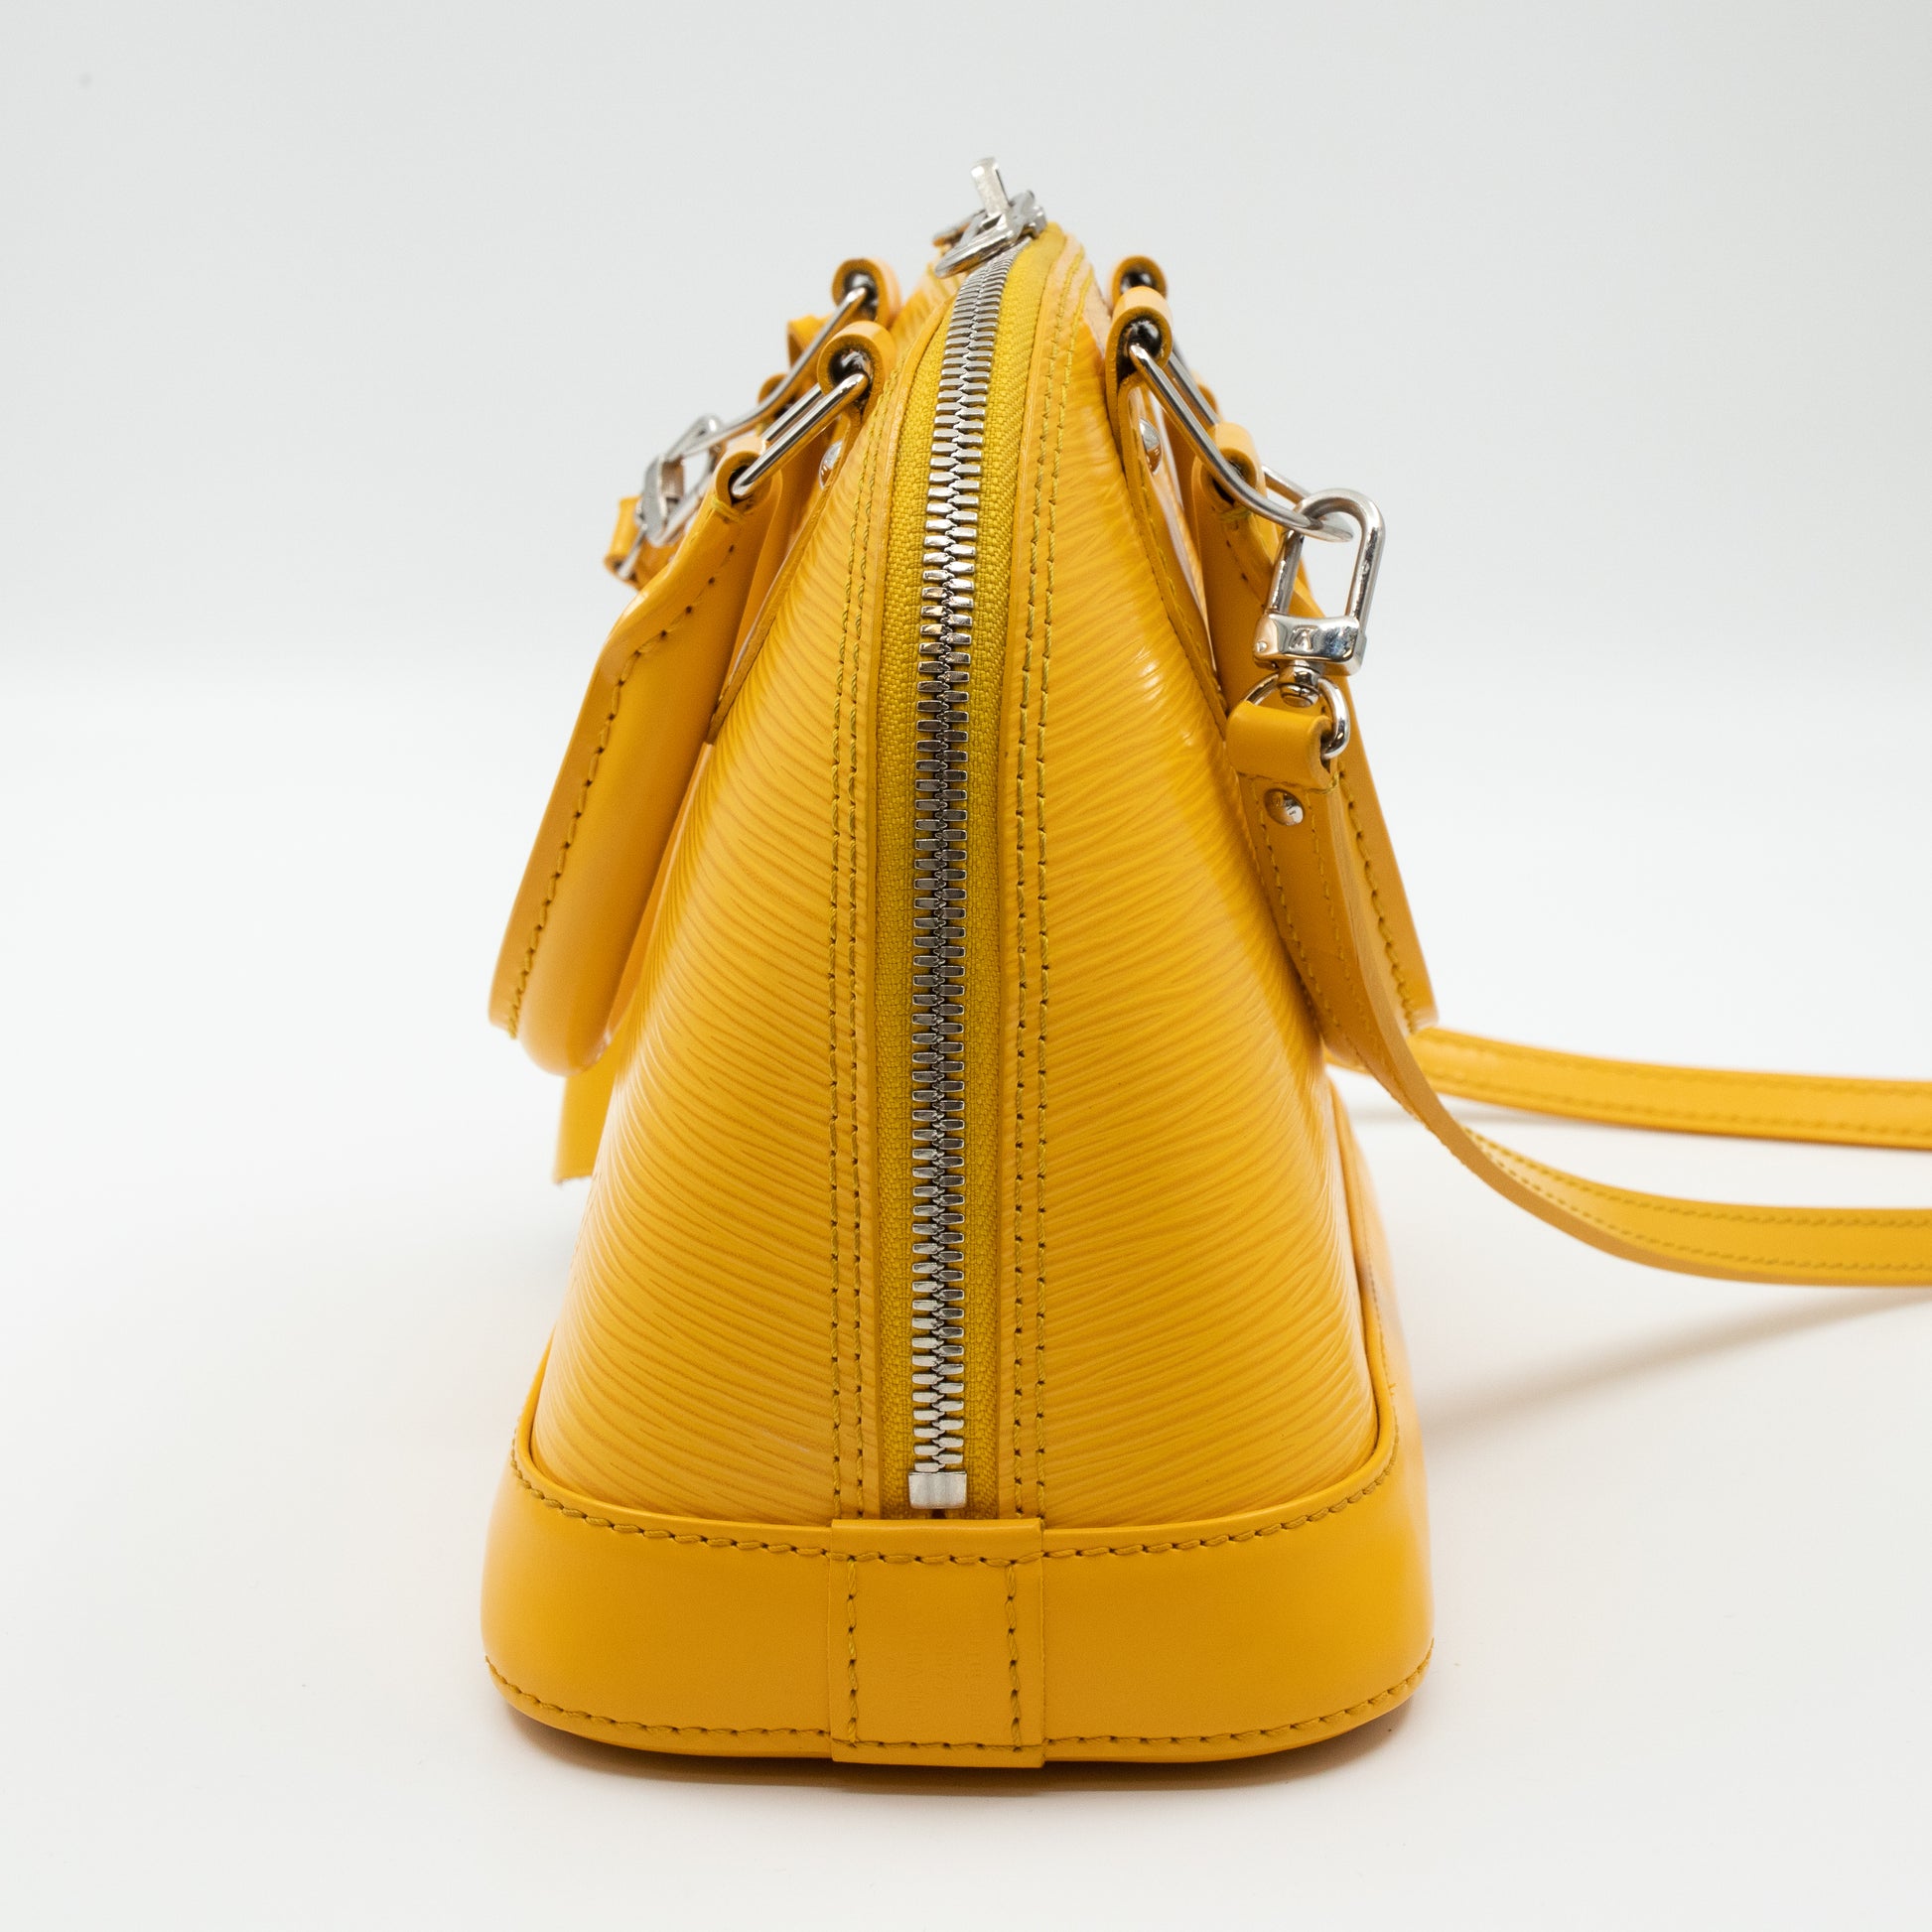 LOUIS VUITTON Alma bag in yellow epi leather, zipper, …